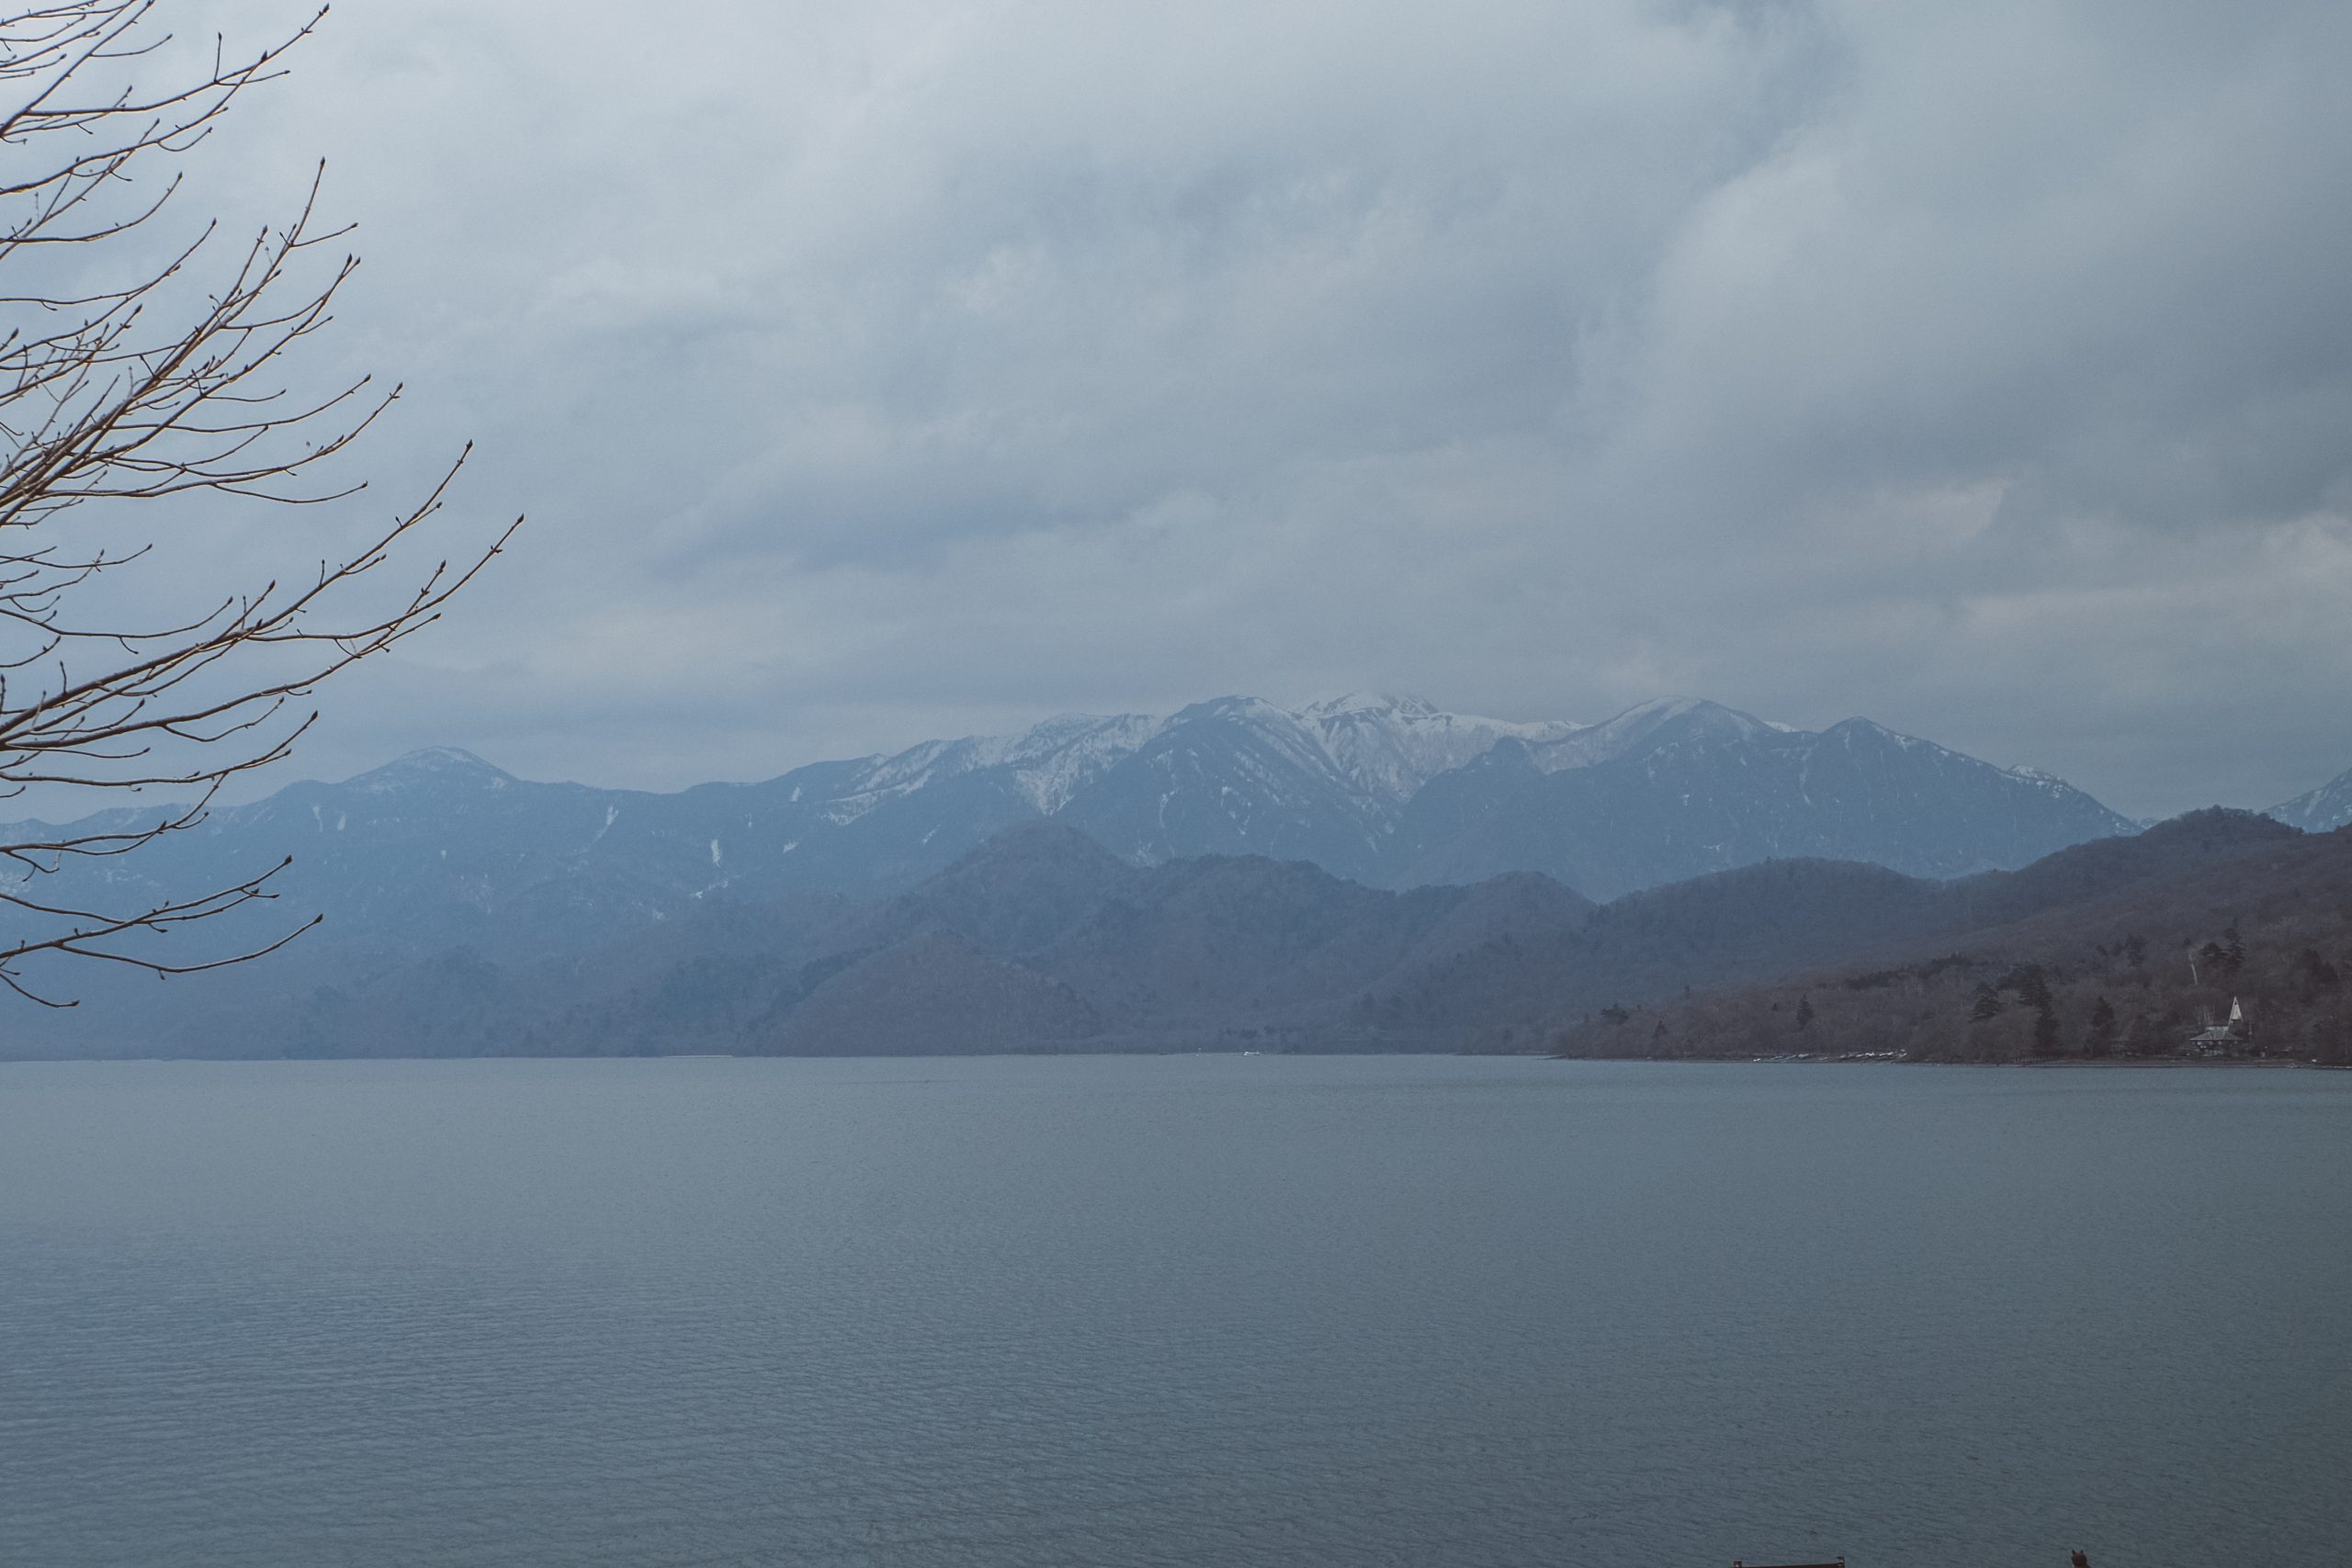 Views of Chuzenji Lake from its shores